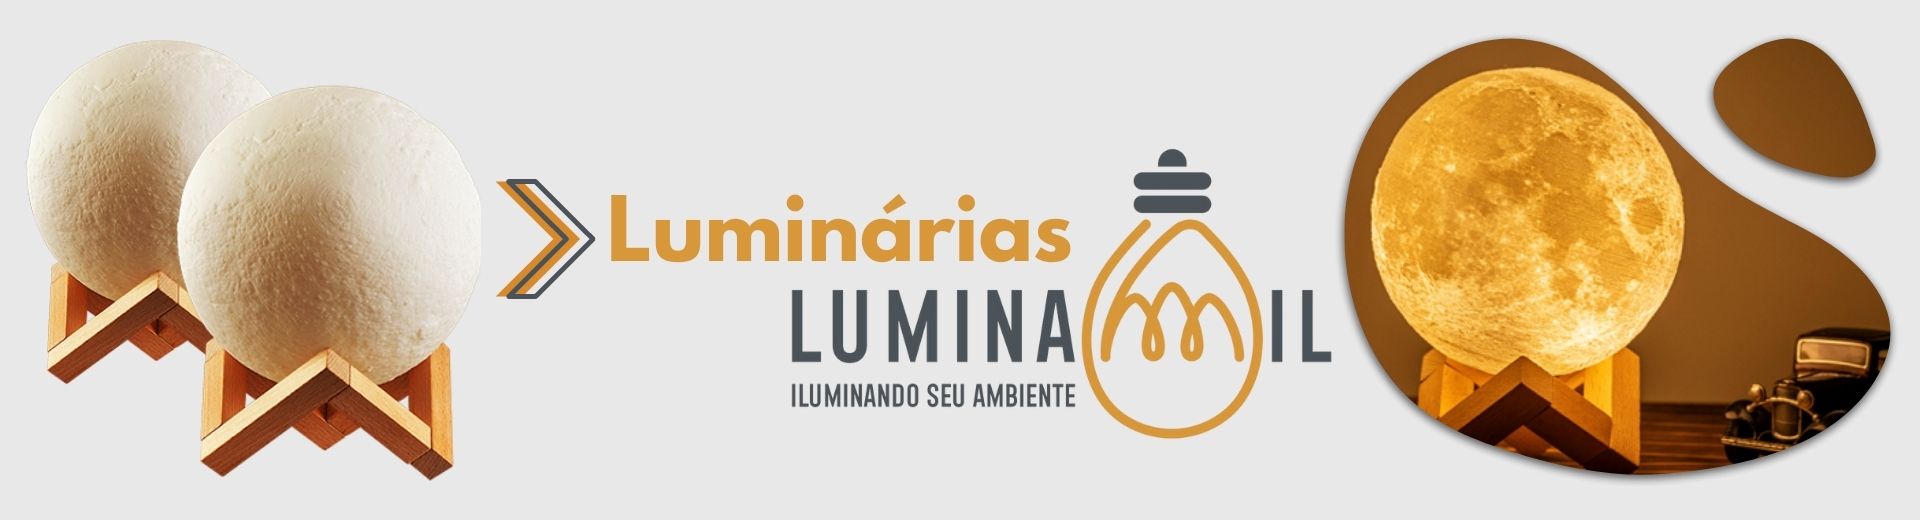 Luminamil - Banner Principal - Luminárias